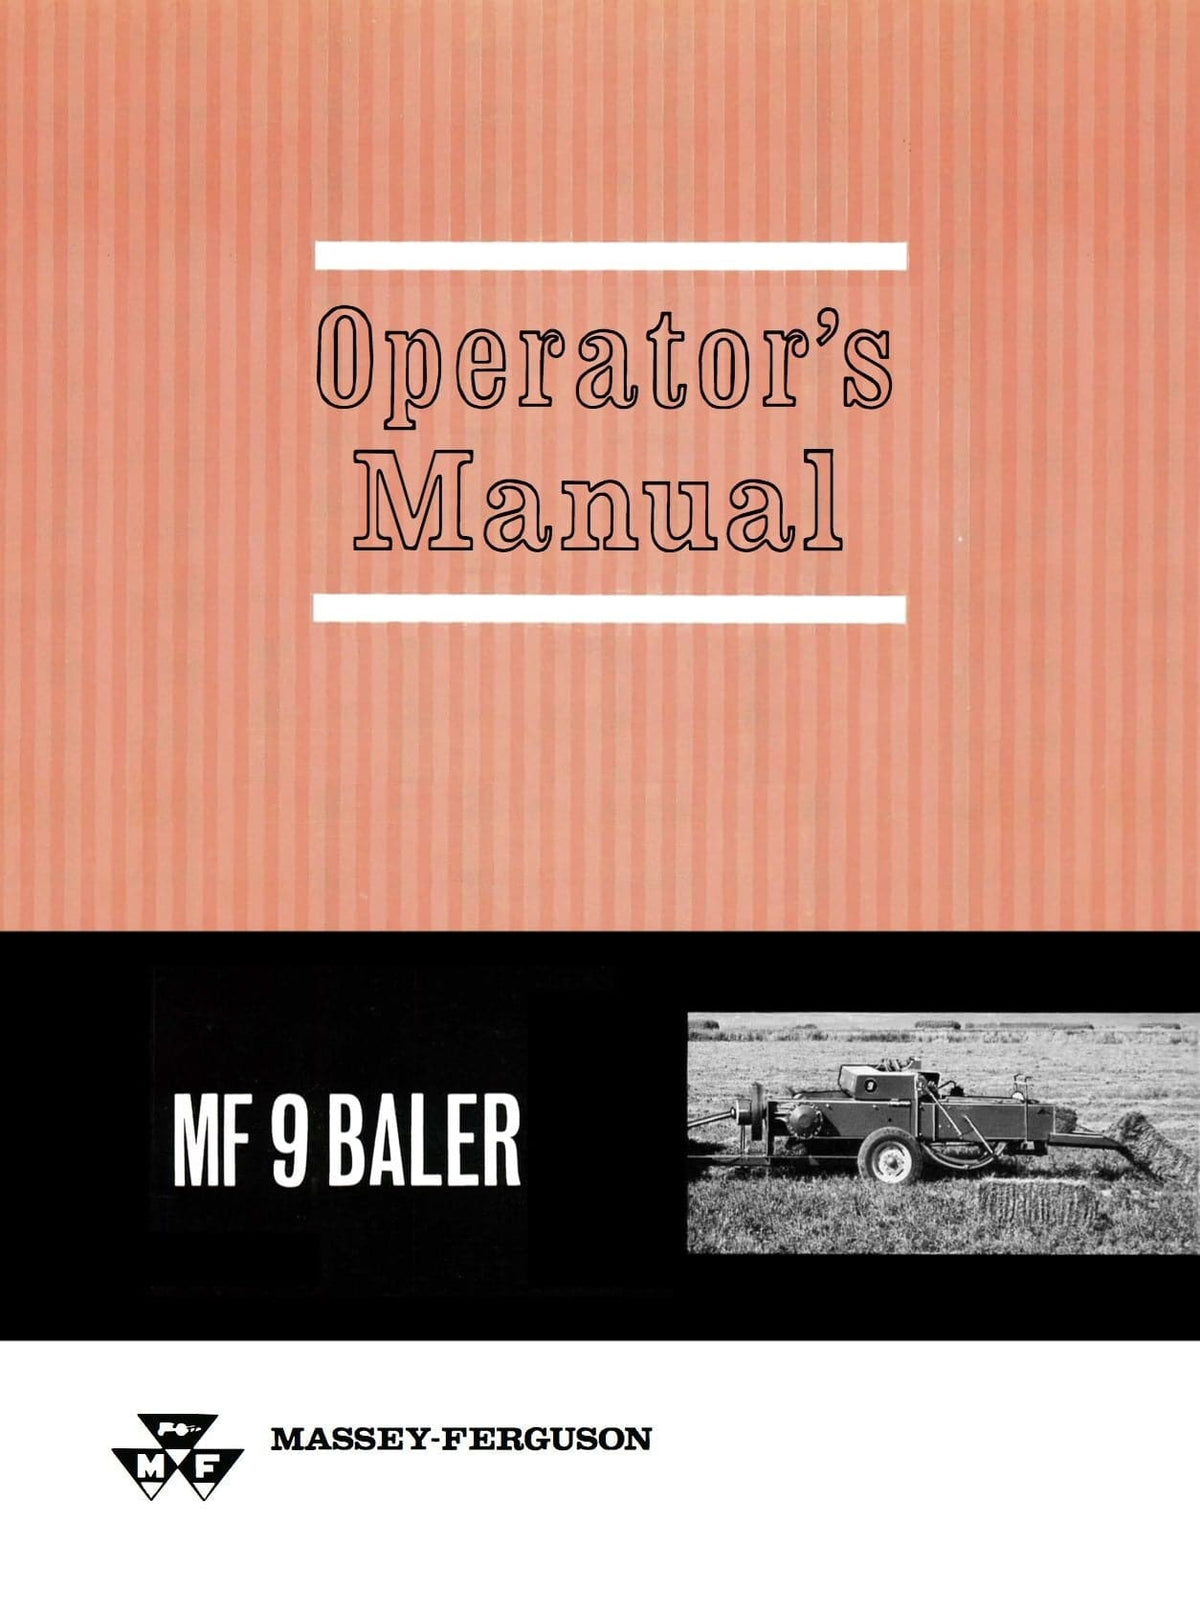 Massey Ferguson MF 9 Baler - Operator's Manual - Ag Manuals - A Provider of Digital Farm Manuals - 1